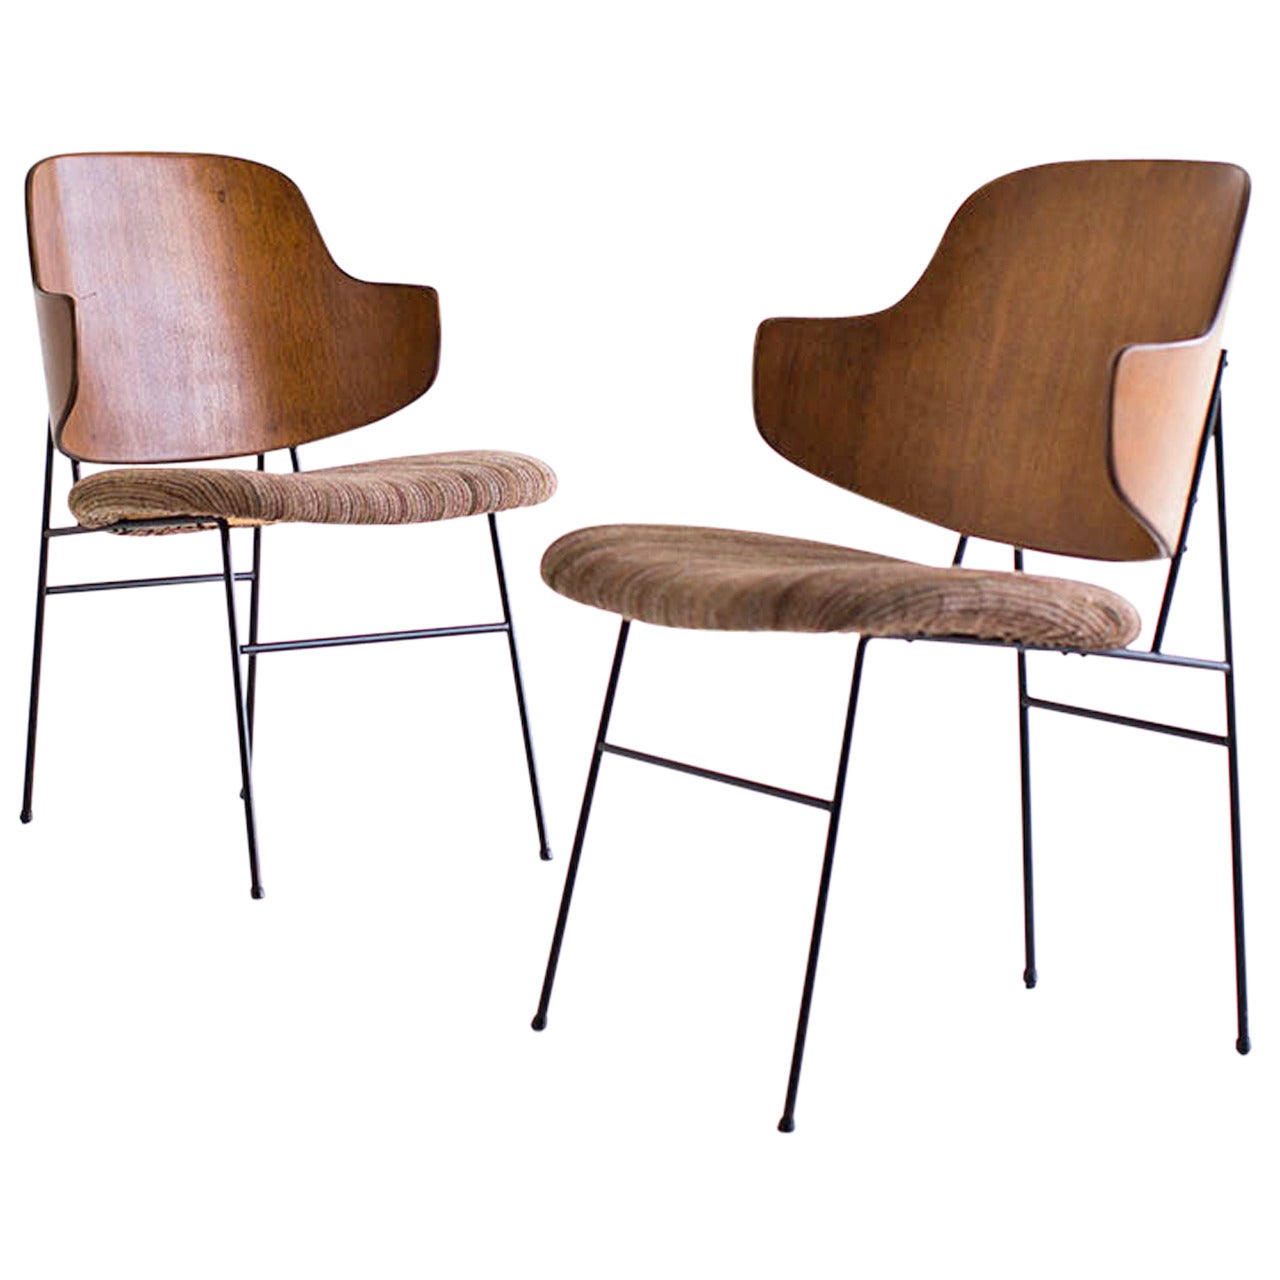 Ib Kofod-Larsen Penguin Chairs